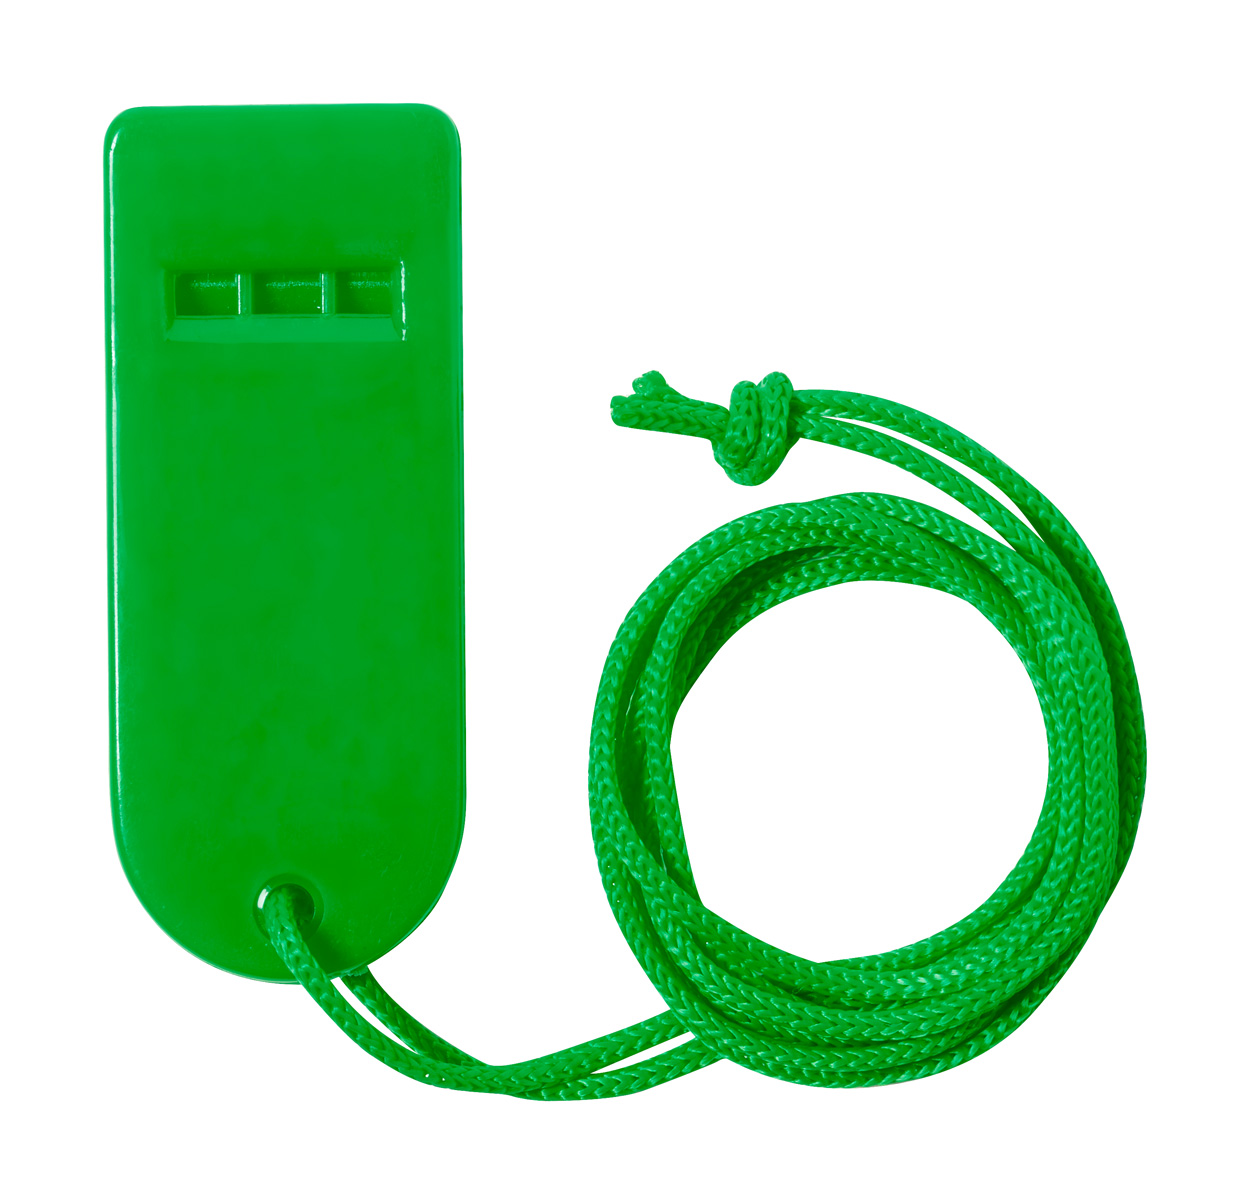 Forlong whistle - green